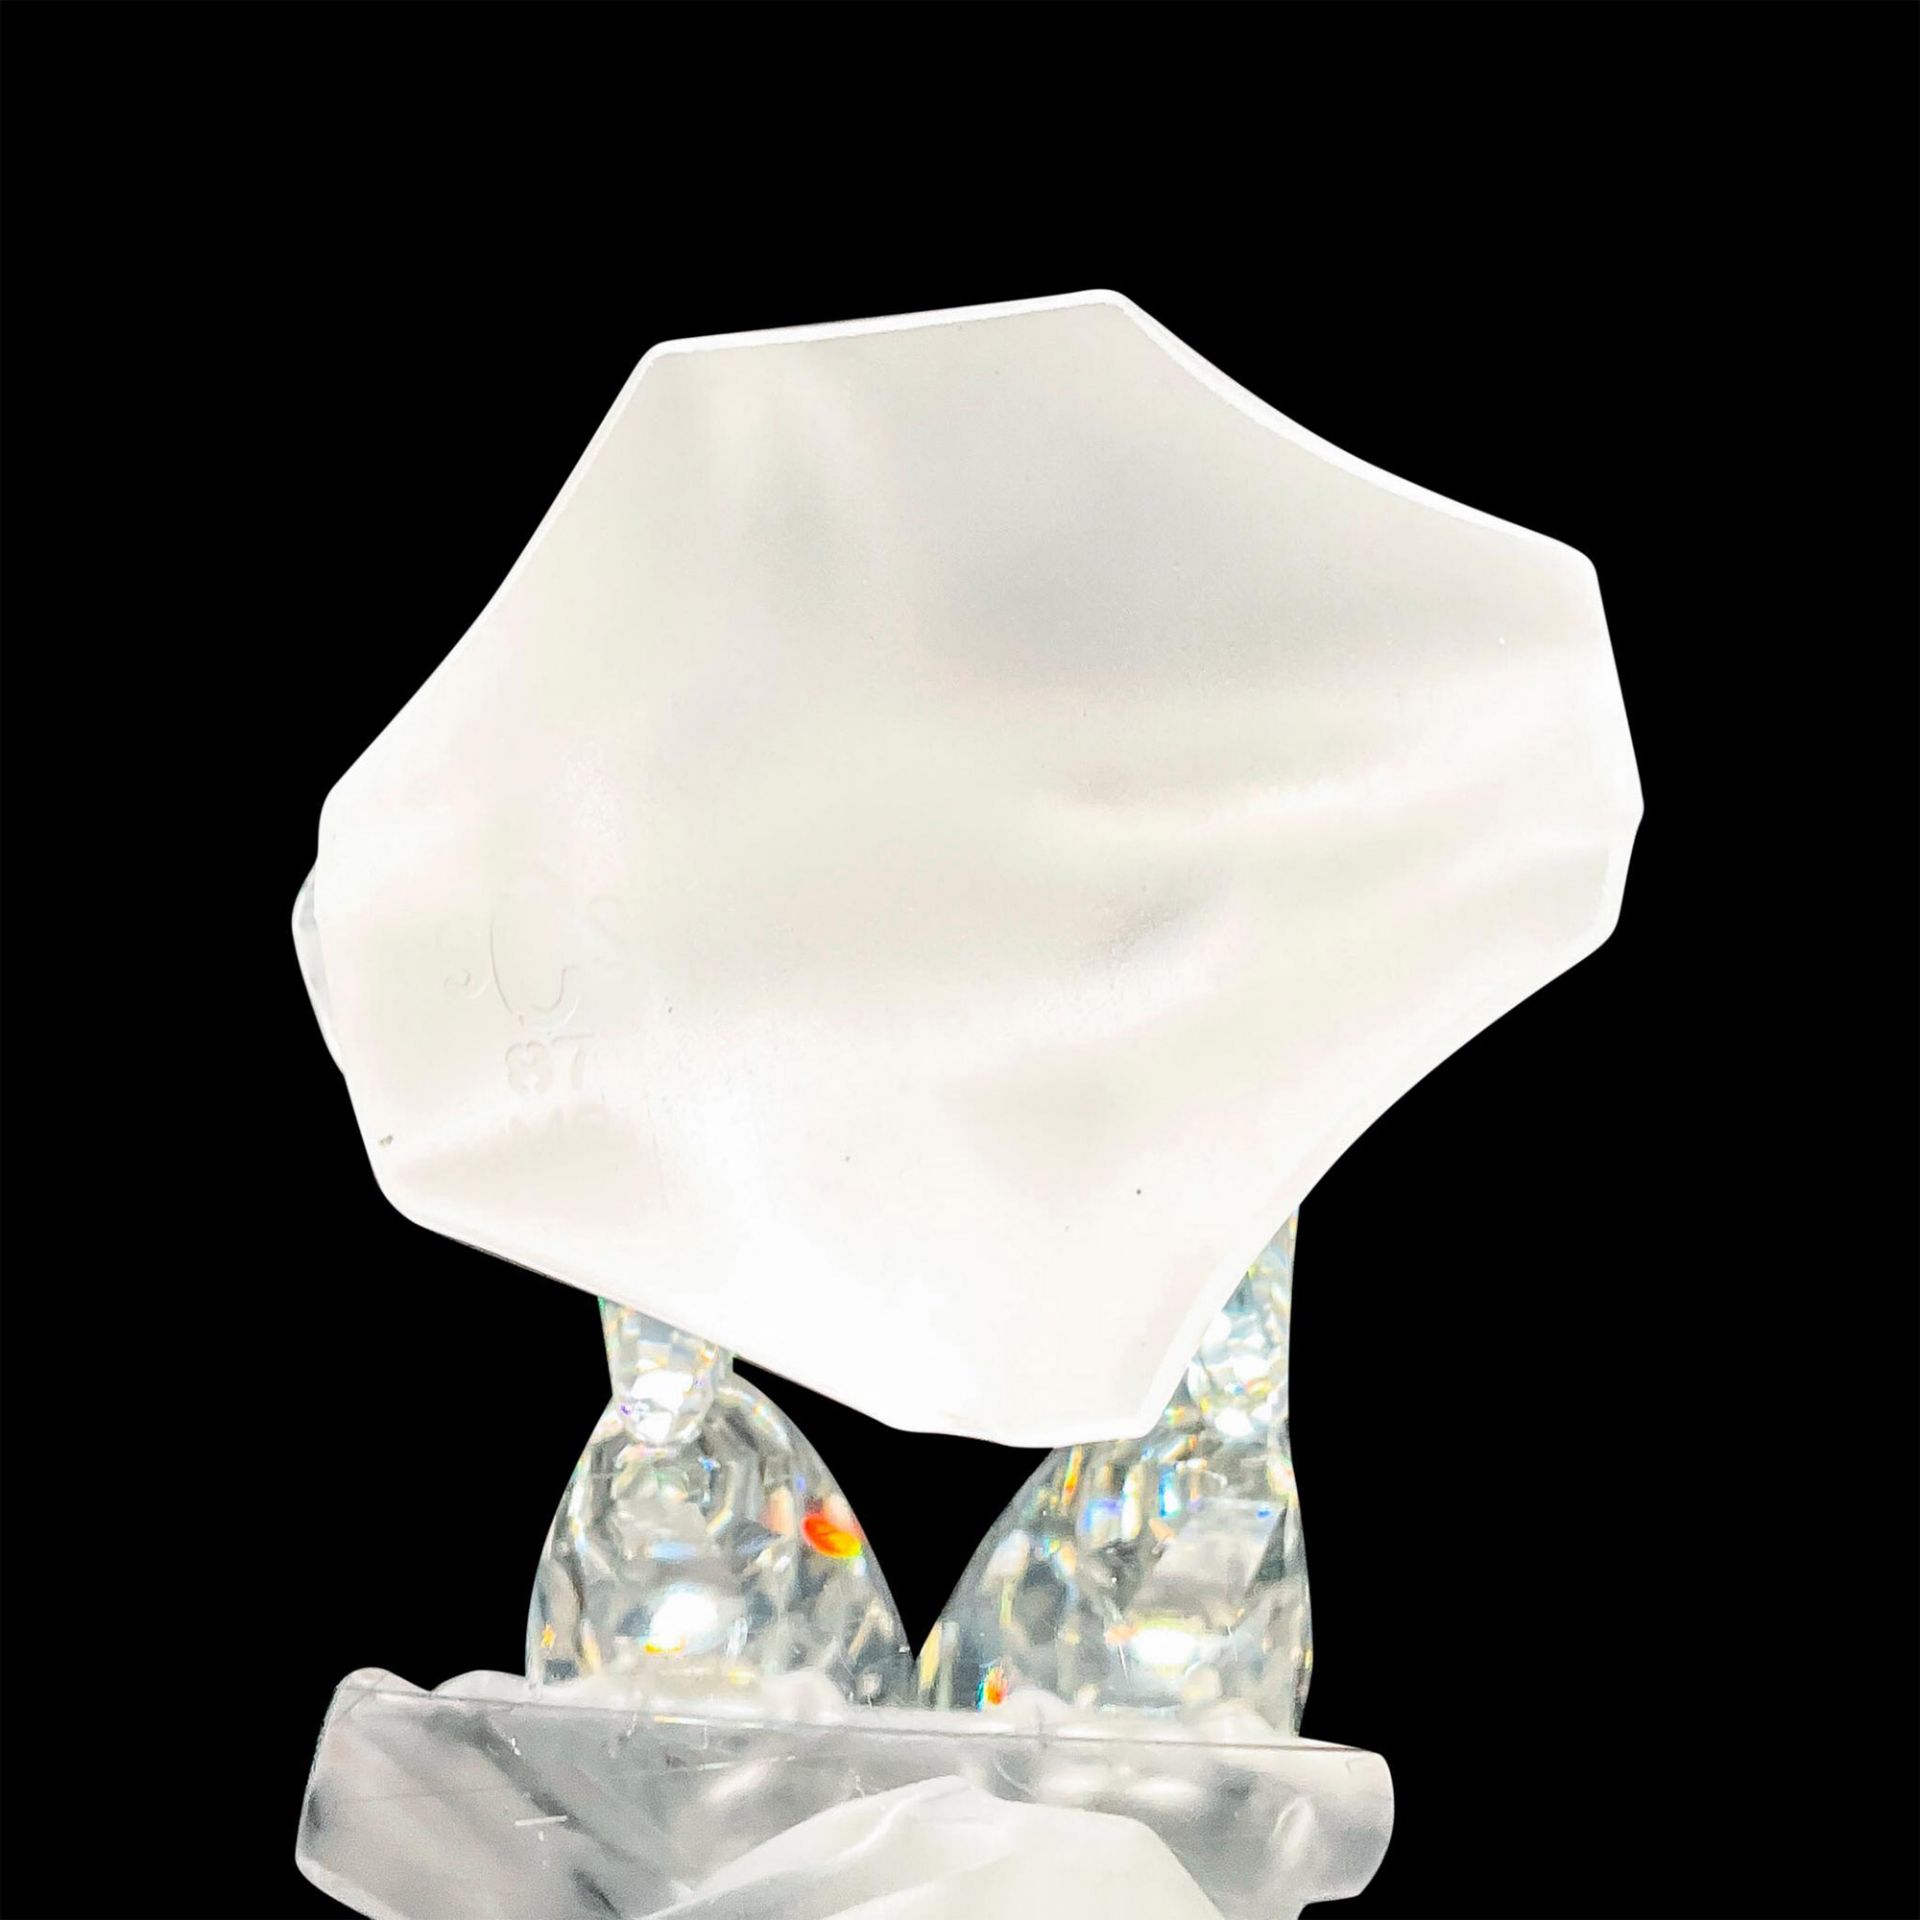 Swarovski Silver Crystal Figurine, Togetherness - Image 4 of 4